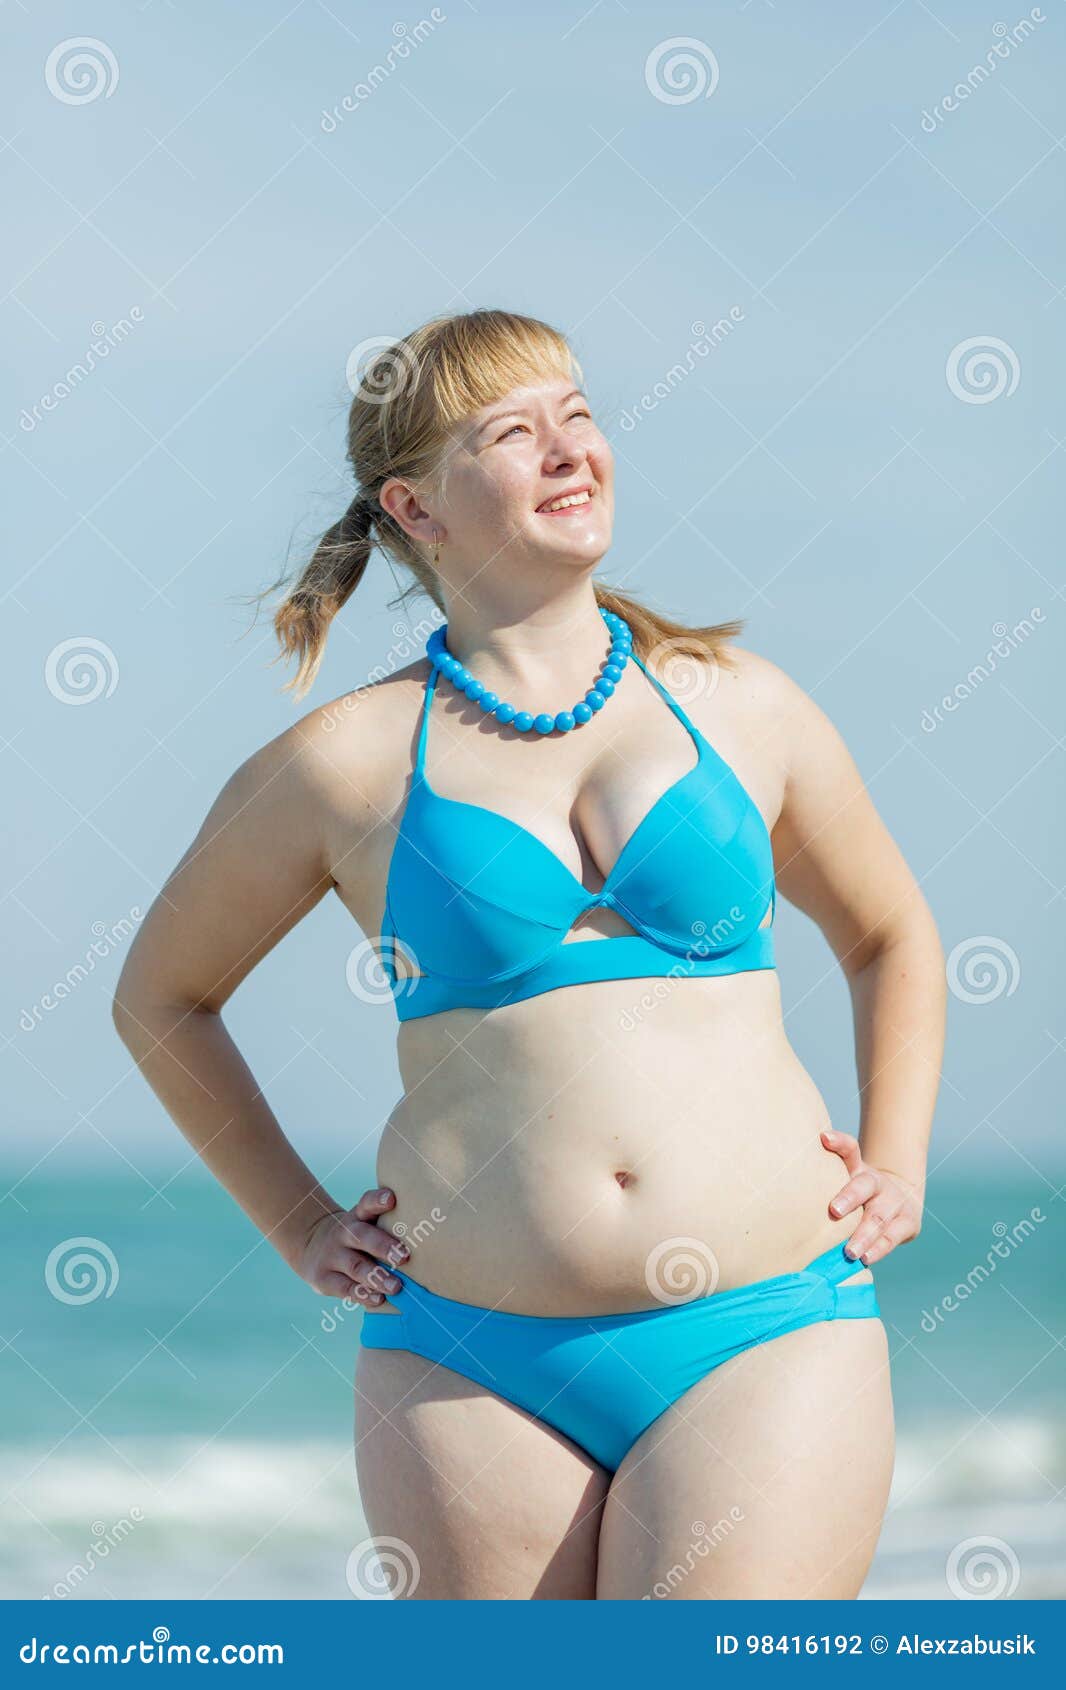 amateur middle-aged women in bikinis